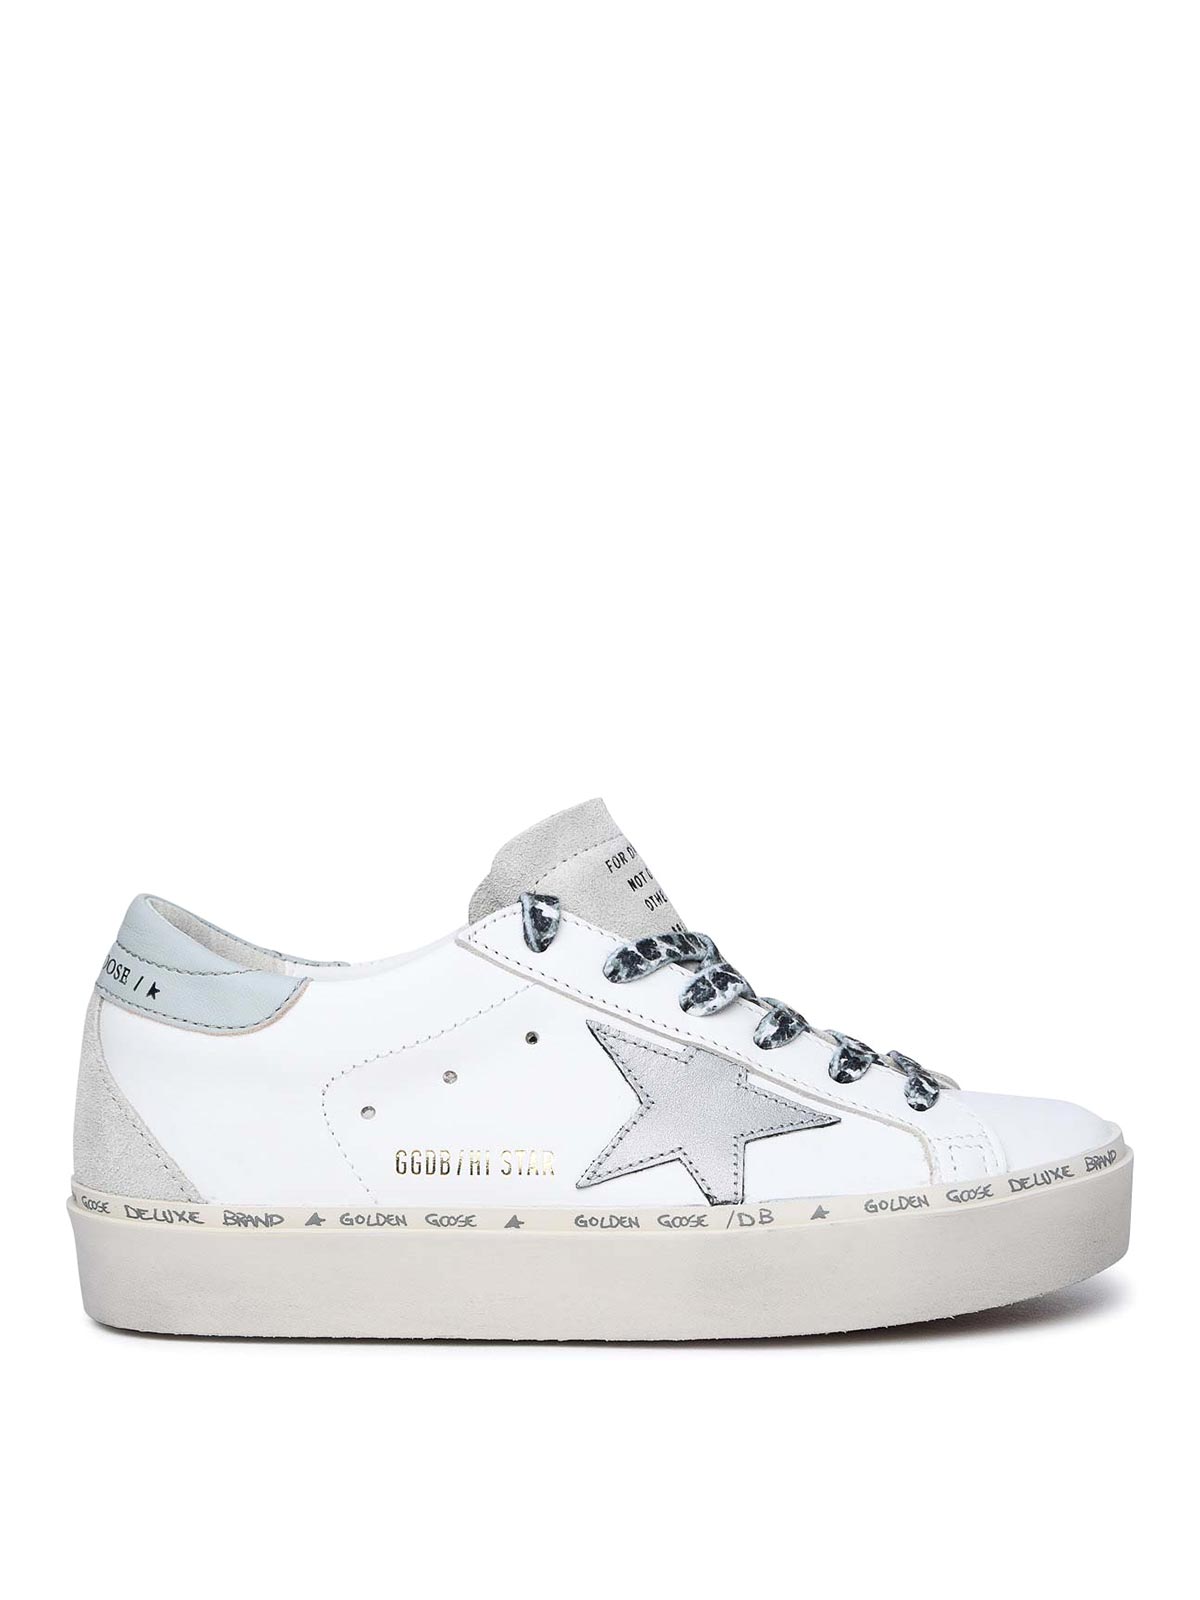 Shop Golden Goose Hi Star Sneakers In White